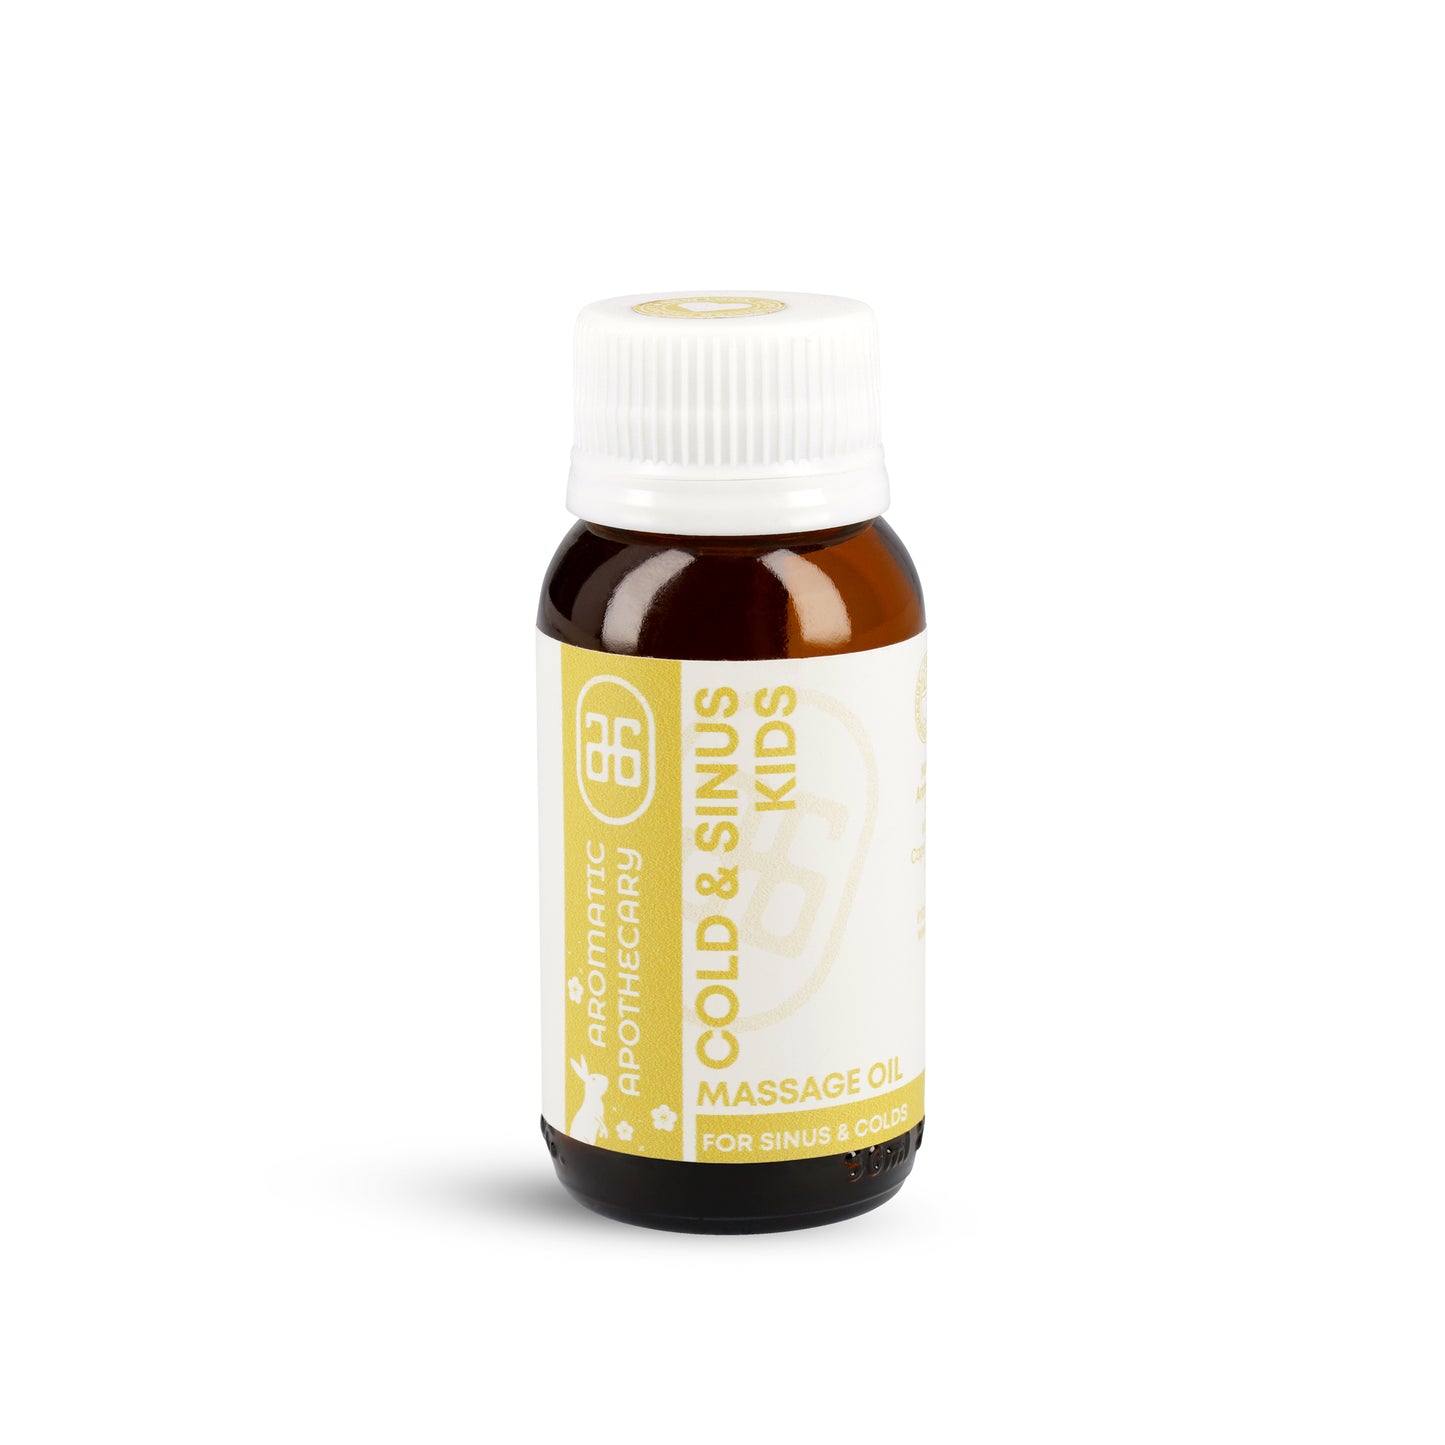 Aromatic Apothecary - Cold & Sinus Kids - Sneezes & Wheezes massage oil 60ml